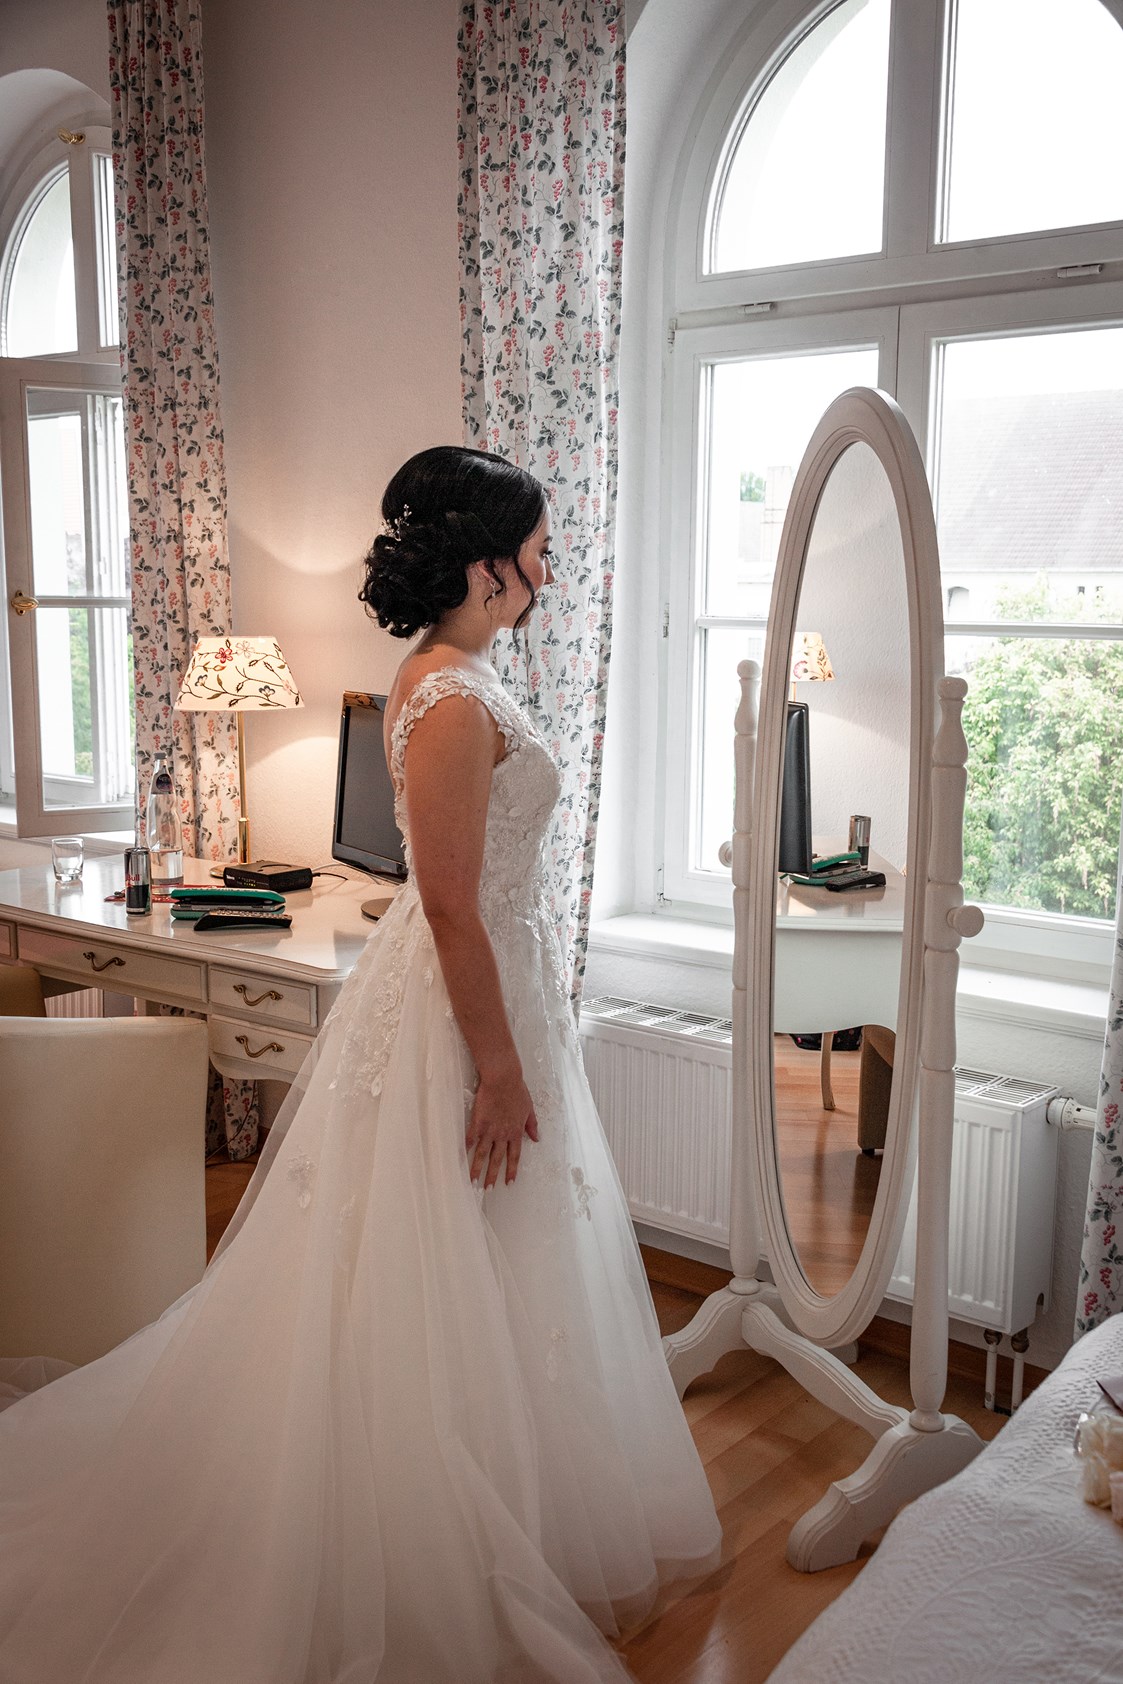 Hochzeitsfotograf: Getting-Ready, Hochzeitsreportage  - Zerina Kaps Photography 